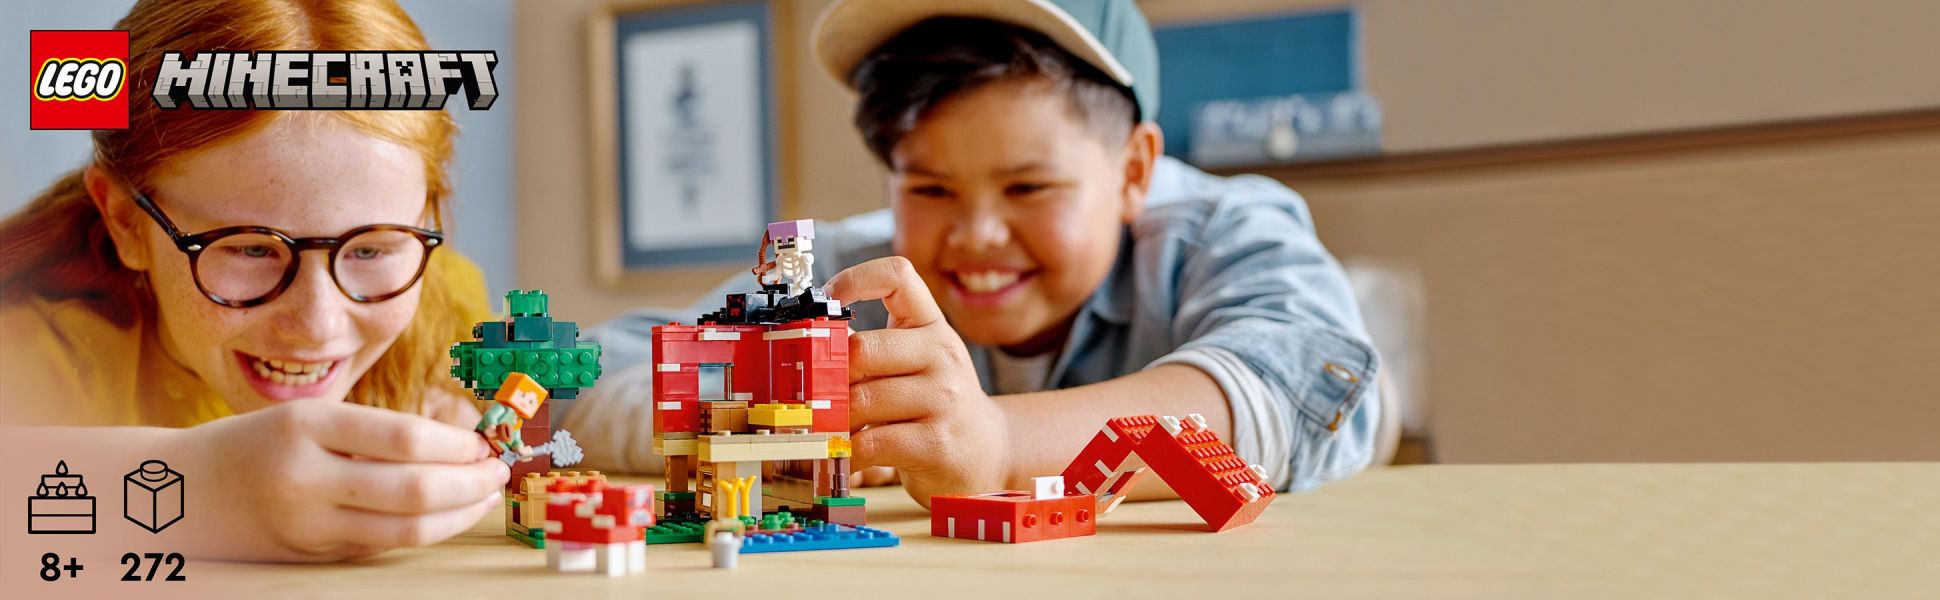 LEGO Minecraft The Mushroom House 21179 Building Toy Set for Kids Age 8  plus, Gift Idea with Alex, Spider Jockey & Mooshroom Animal Figures